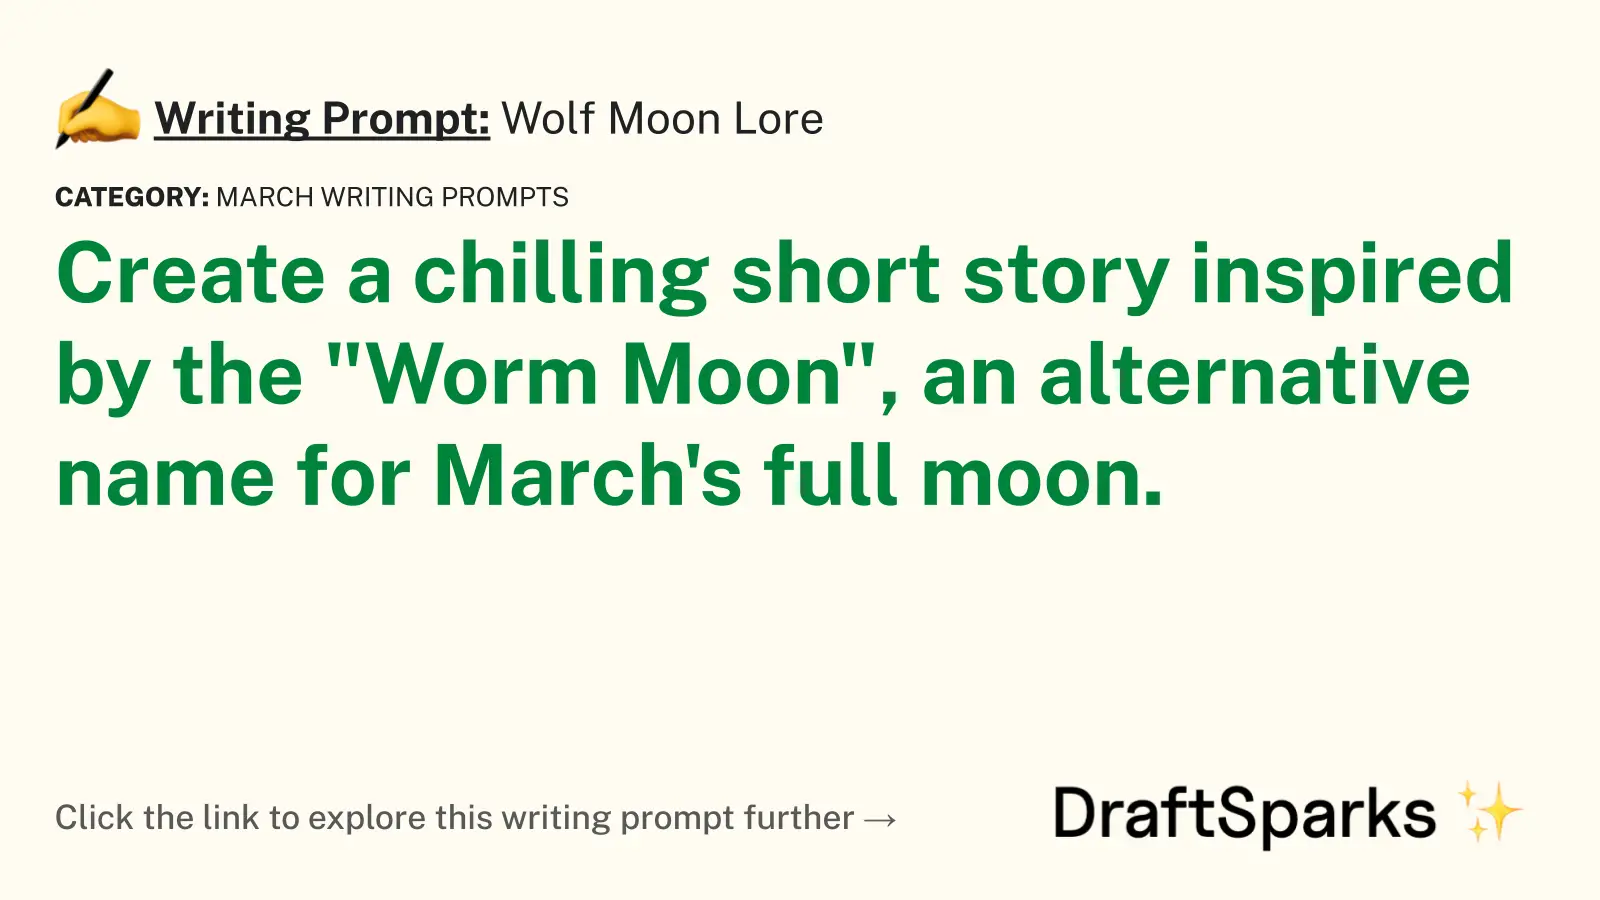 Wolf Moon Lore